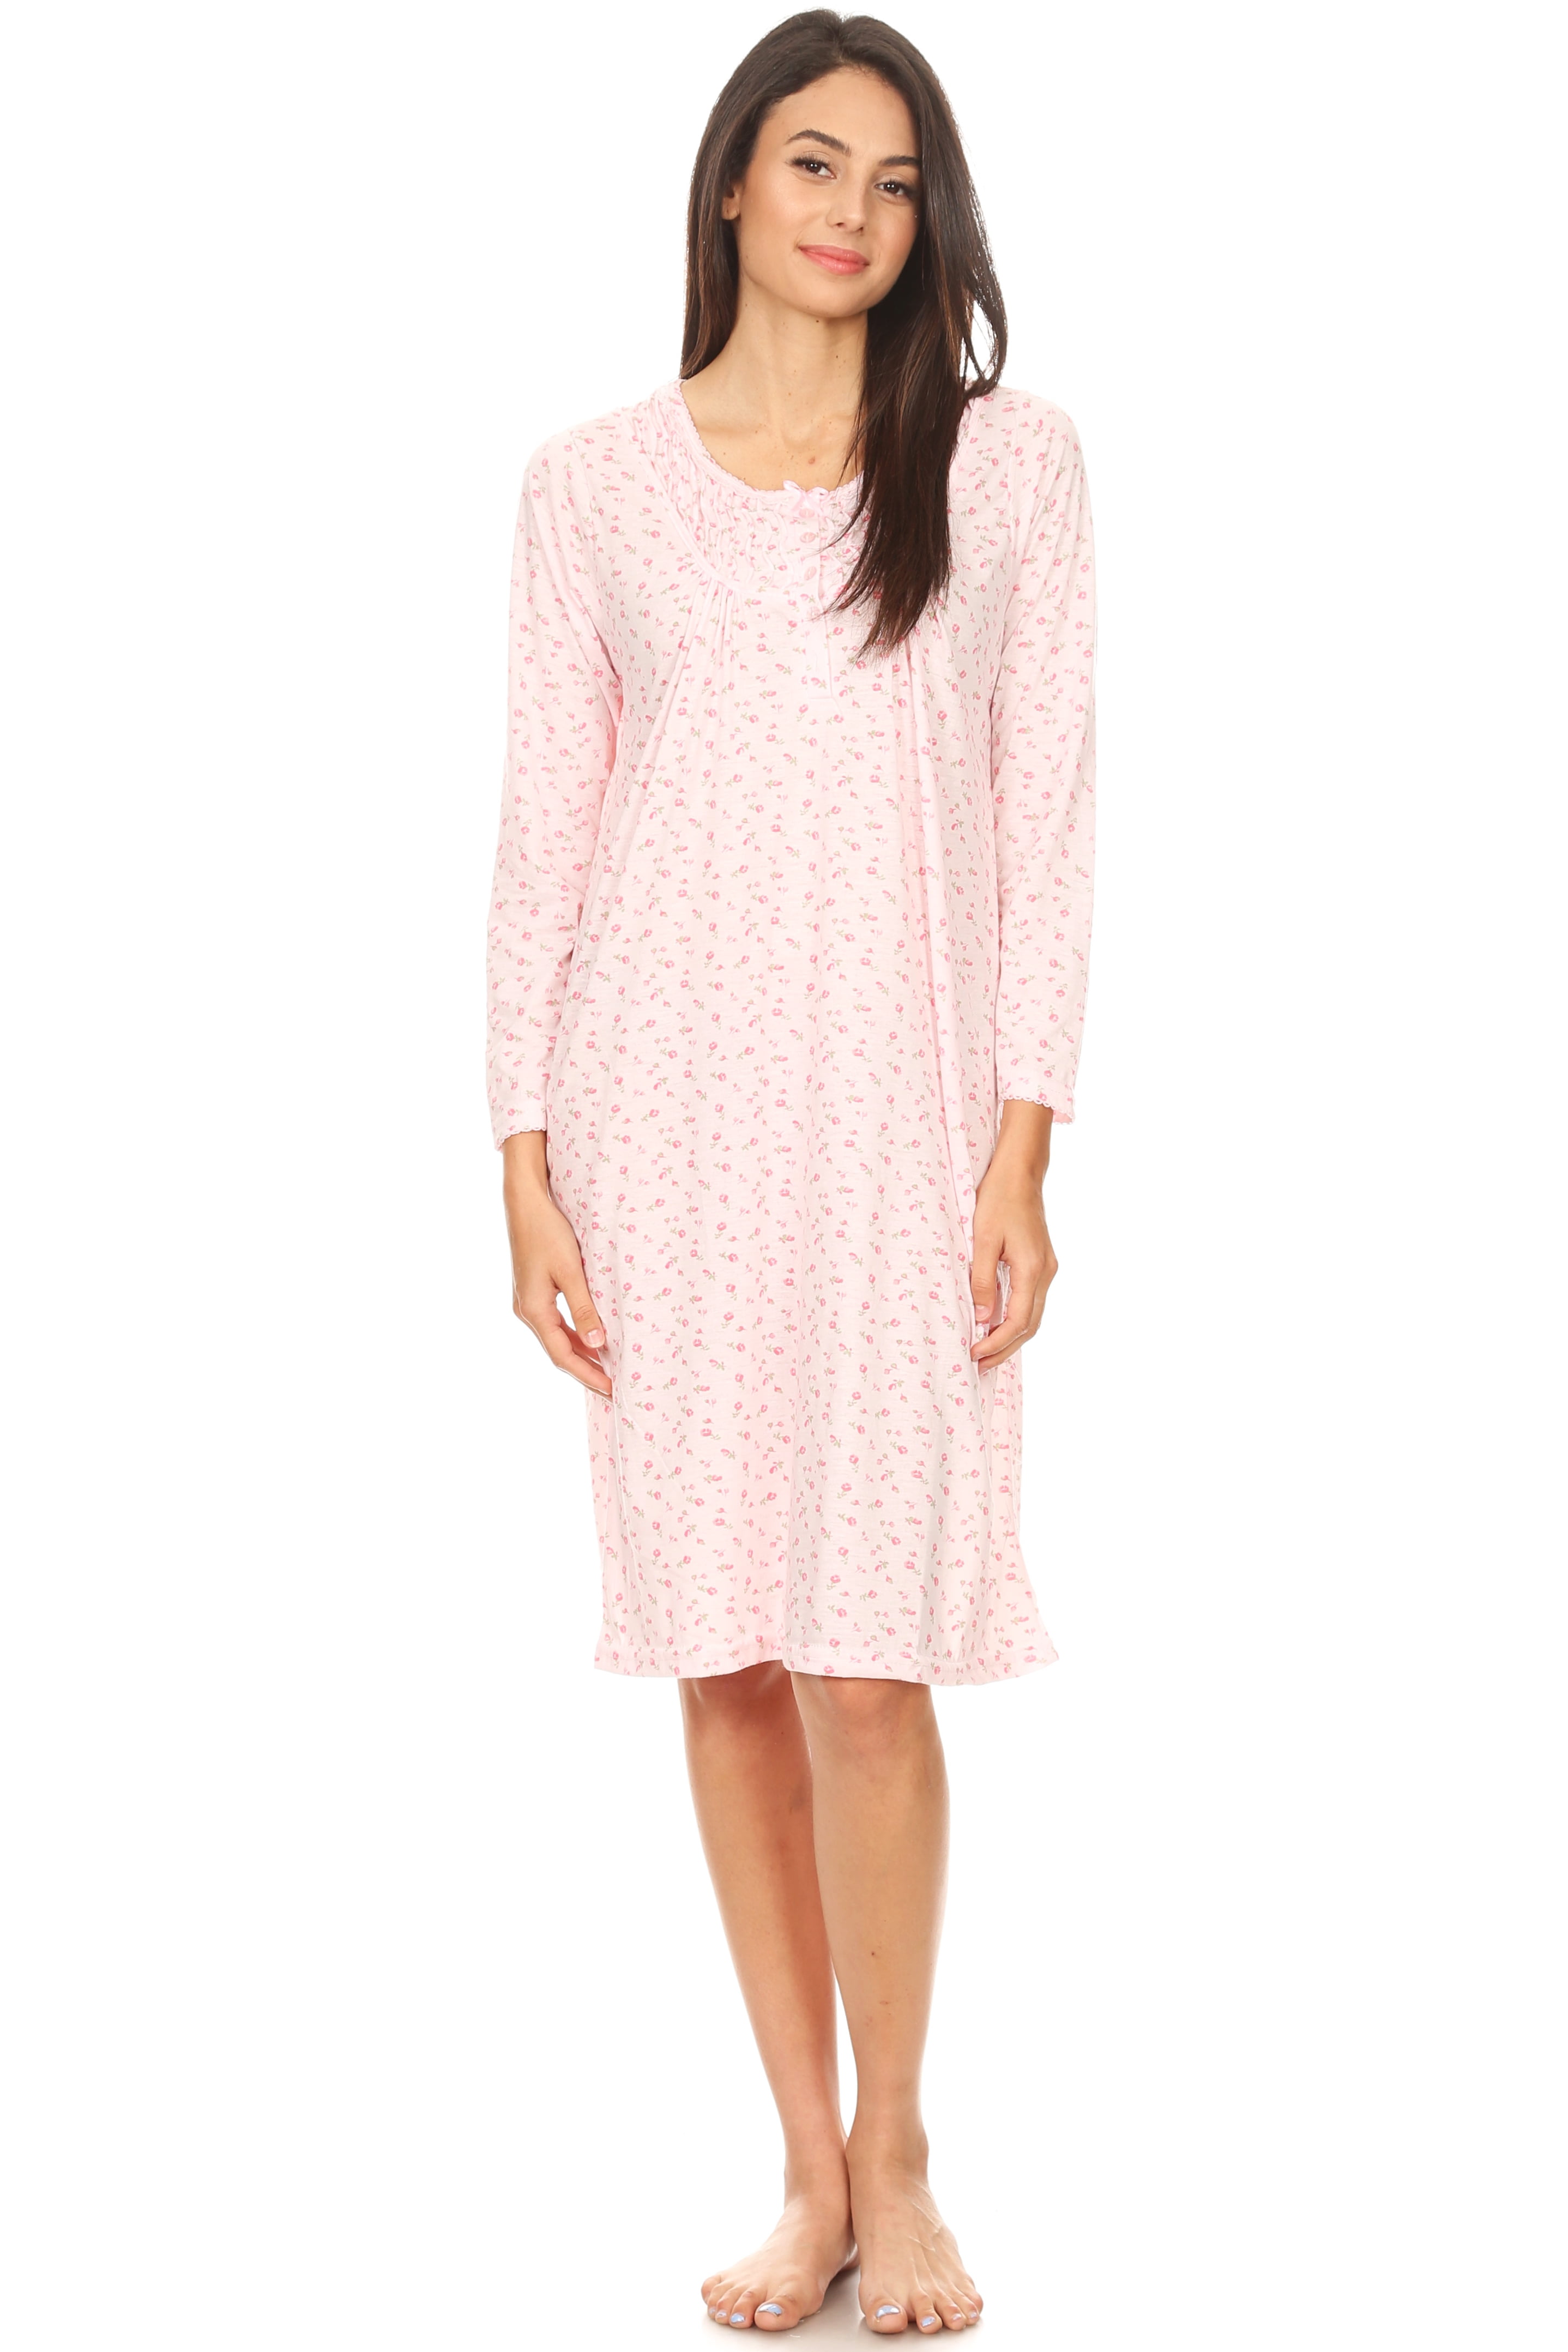 1651 Womens Nightgown Sleepwear Pajamas Woman Long Sleeve Sleep Dress ...